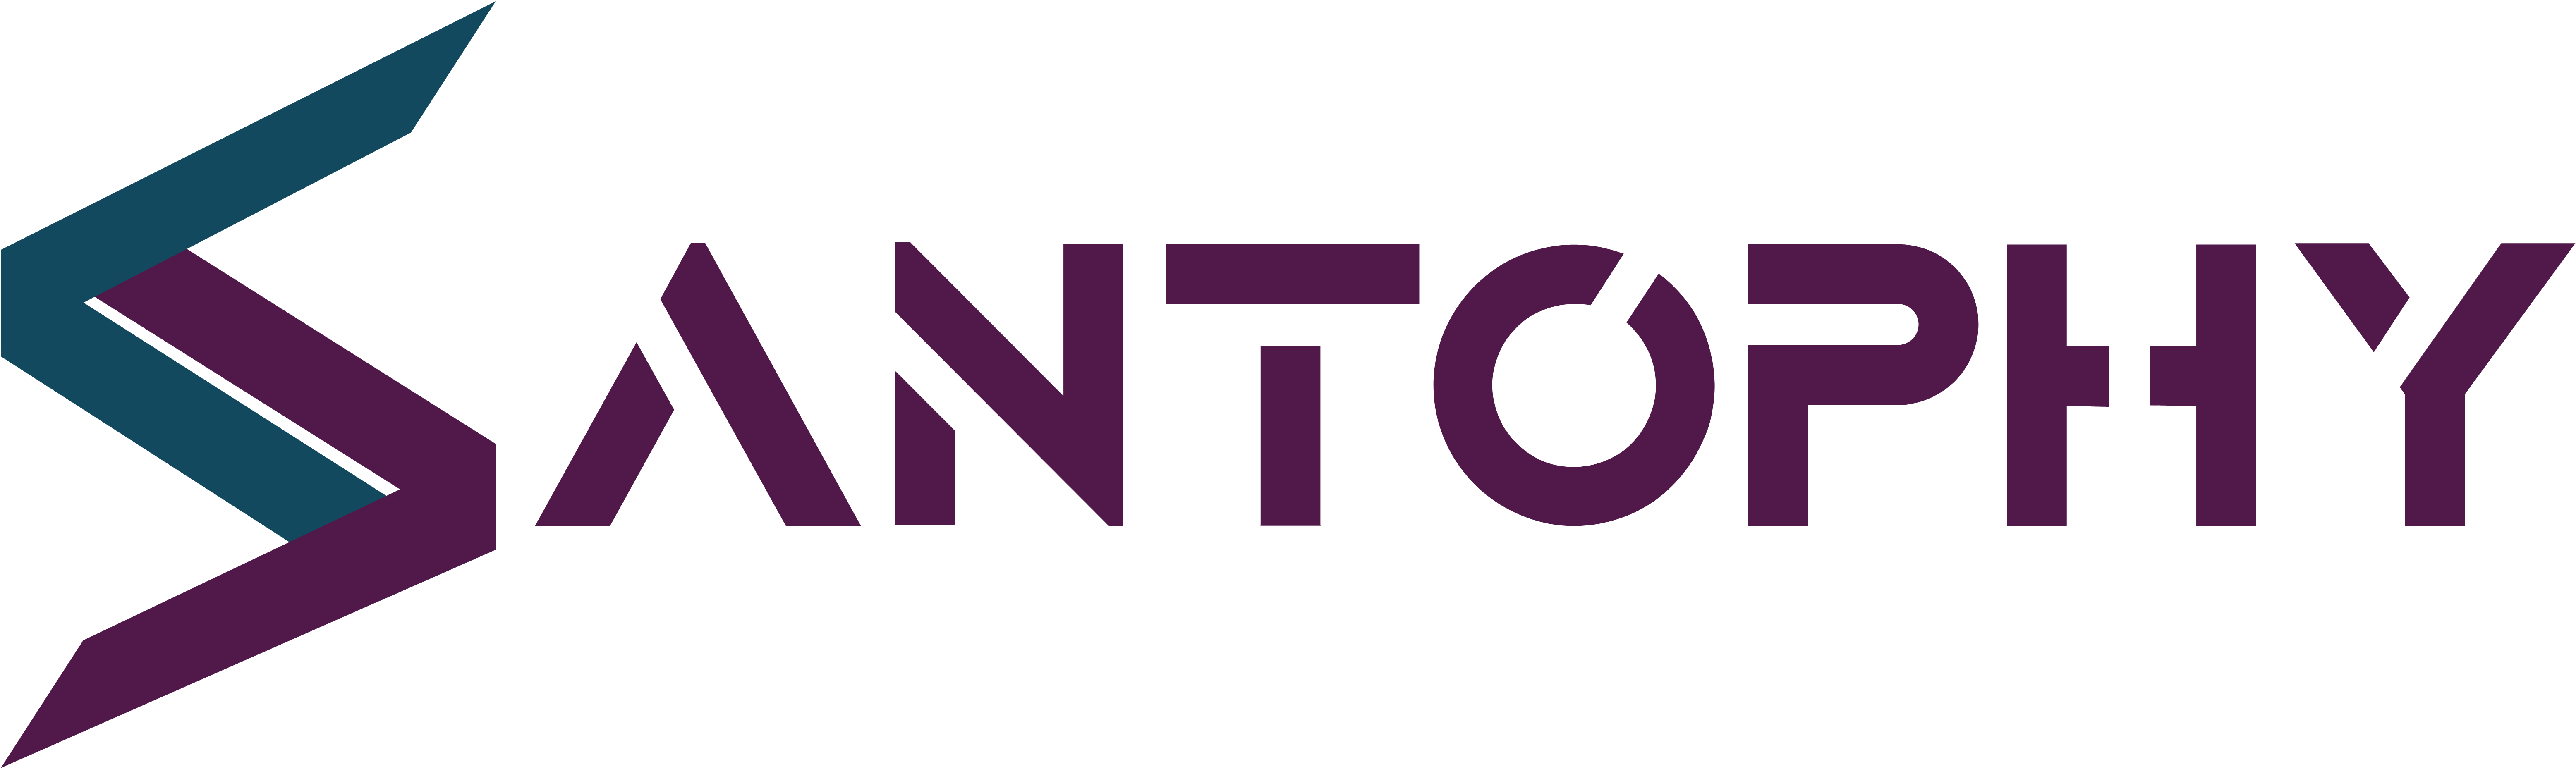 santophy logo